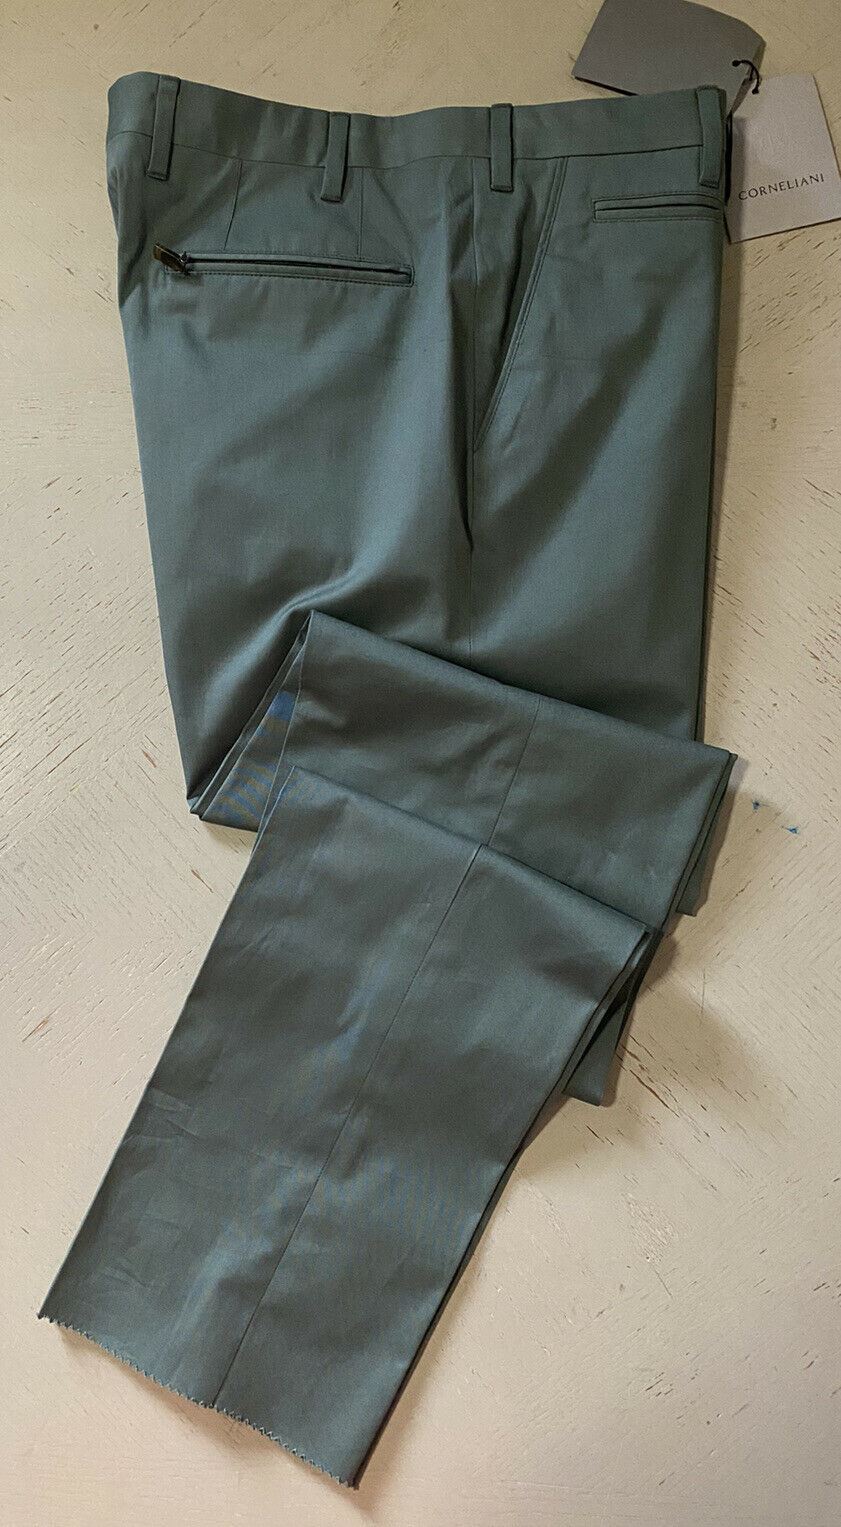 Neu mit Etikett: 325 $ Corneliani Herrenhose Farbe Grün Größe 32 US (48 EU)